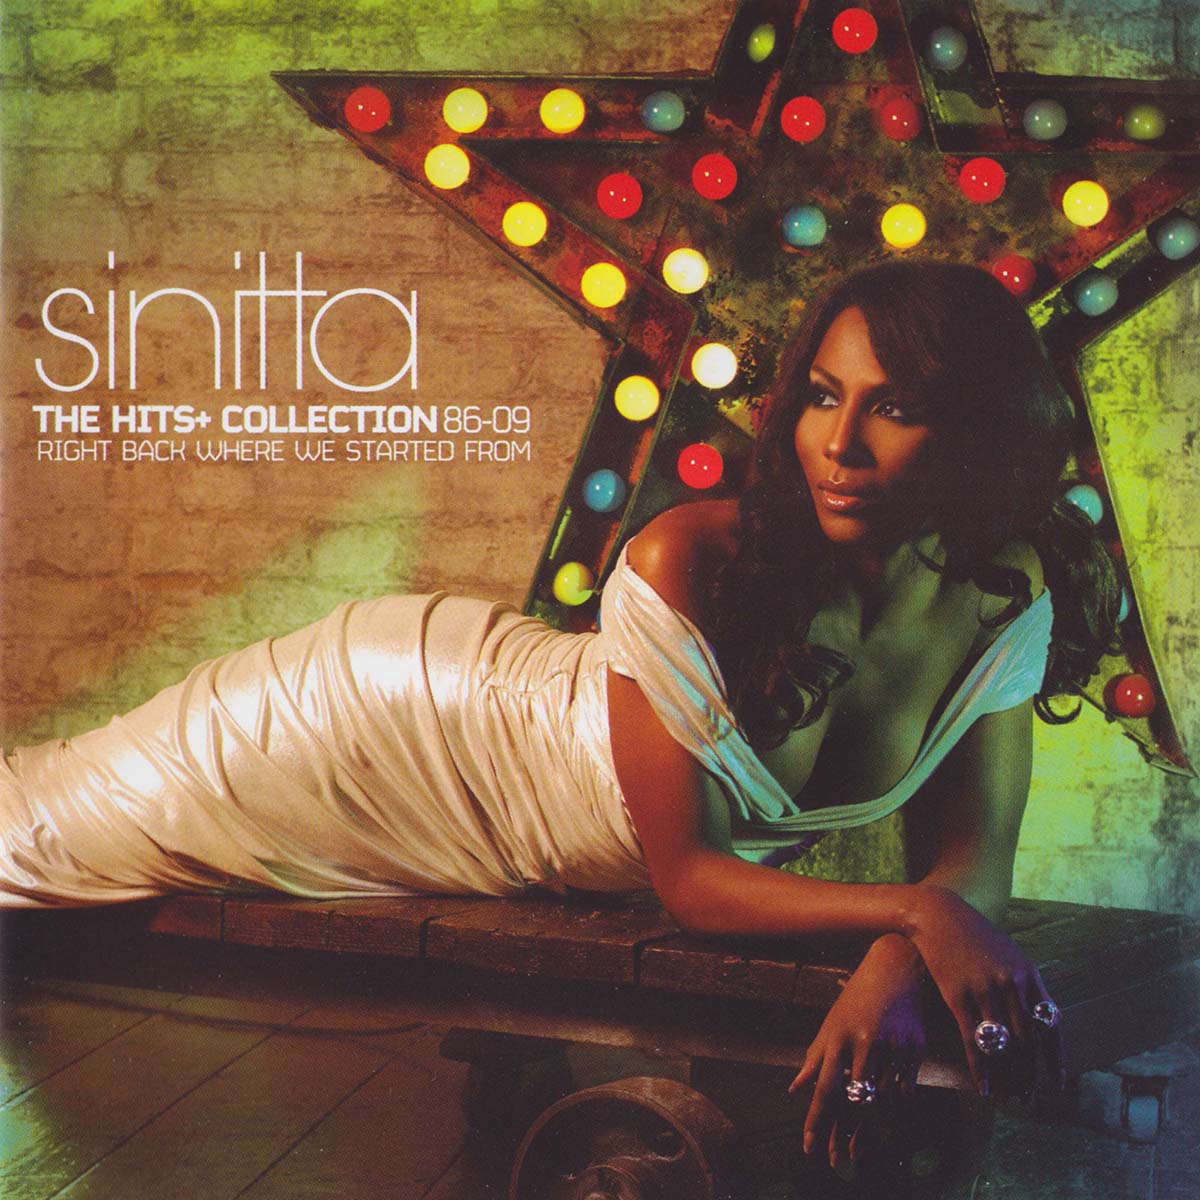 Sinitta - The Hits Collection 86-09 2009 - CD-2 - Sinitta - The Hits Collection 86-09 2009 - CD-2.jpg